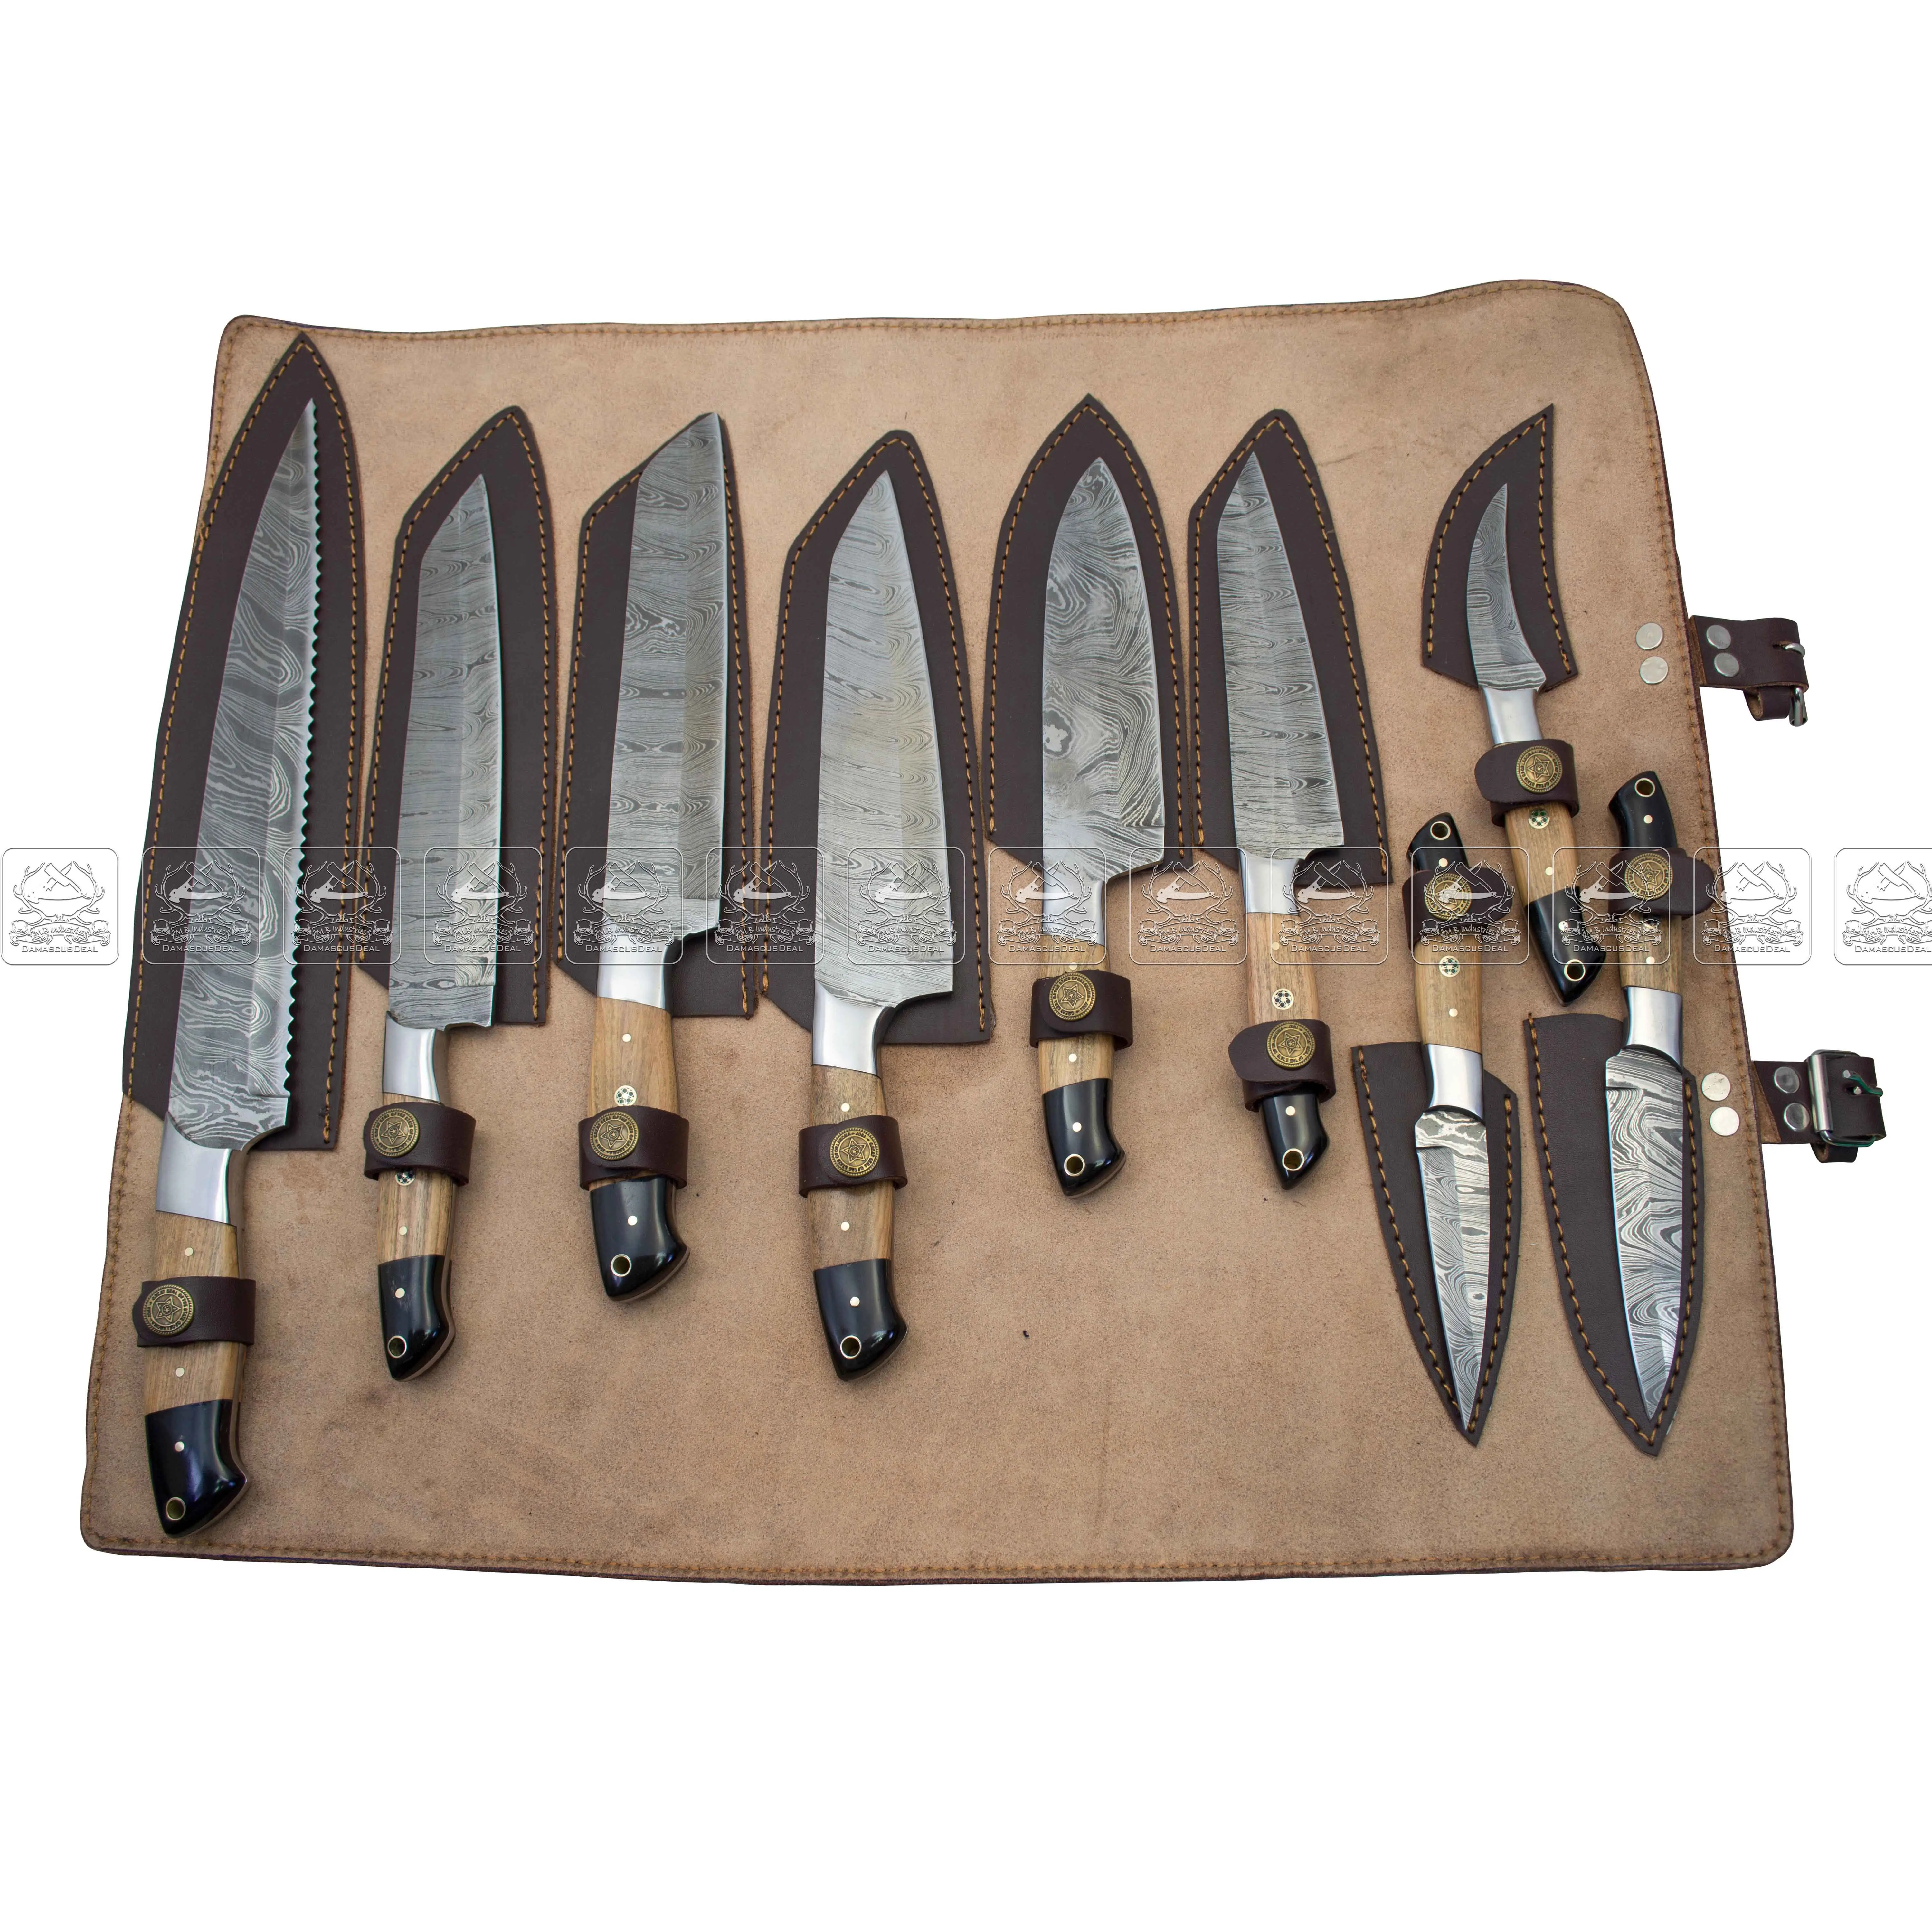 Vendita calda in stile giapponese Set di coltelli da cucina in acciaio damasco DD-KKS-910 legno d'oliva professionale e manico in ebano set di coltelli da cucina